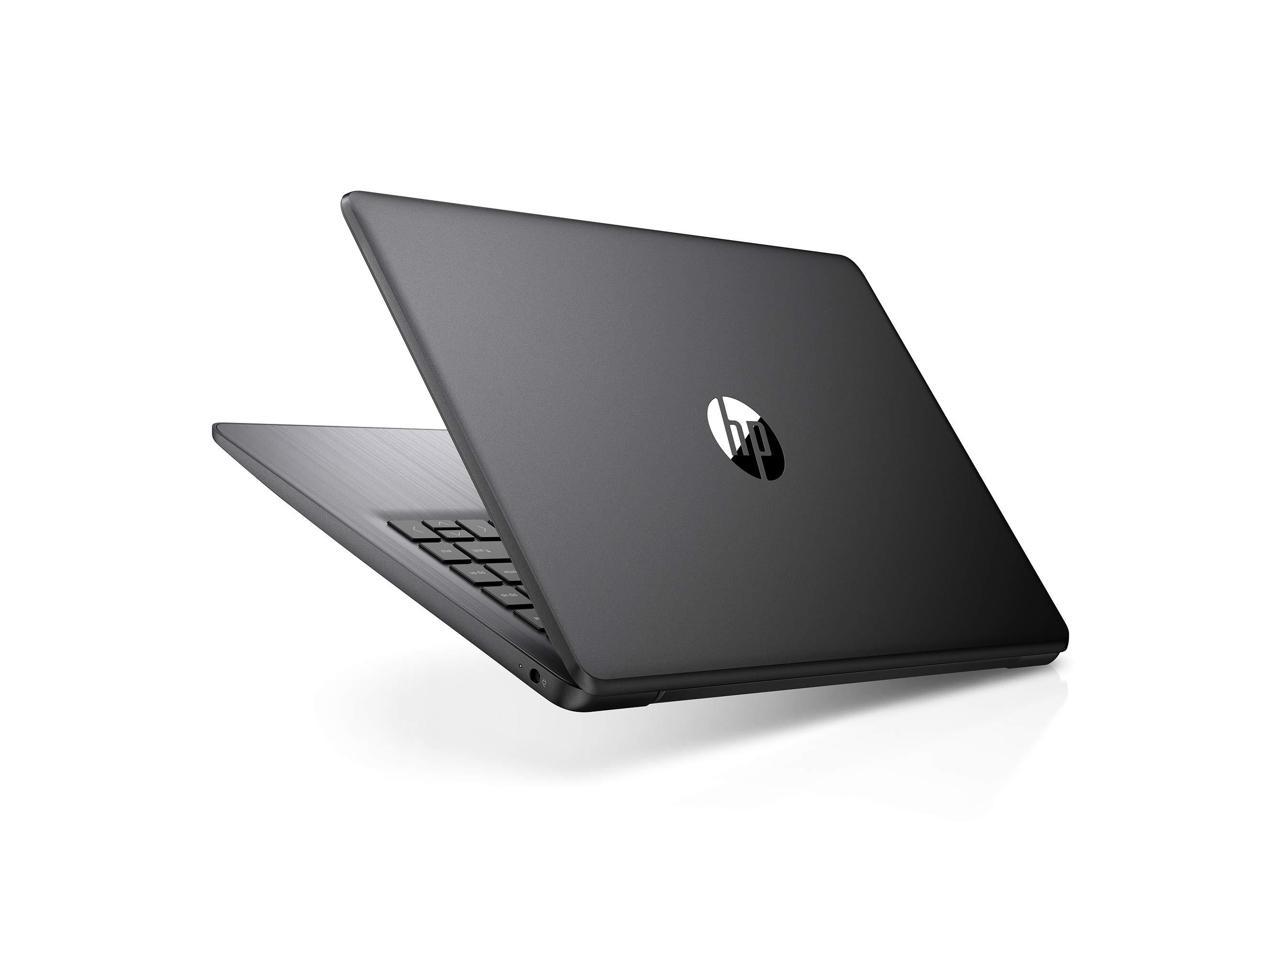 HP Laptop Stream 14-ds0060nr AMD A4-Series A4-9120e (1.50 GHz) 4 GB Memory 64 GB eMMC SSD AMD Radeon R3 Series 14.0" Windows 10 S